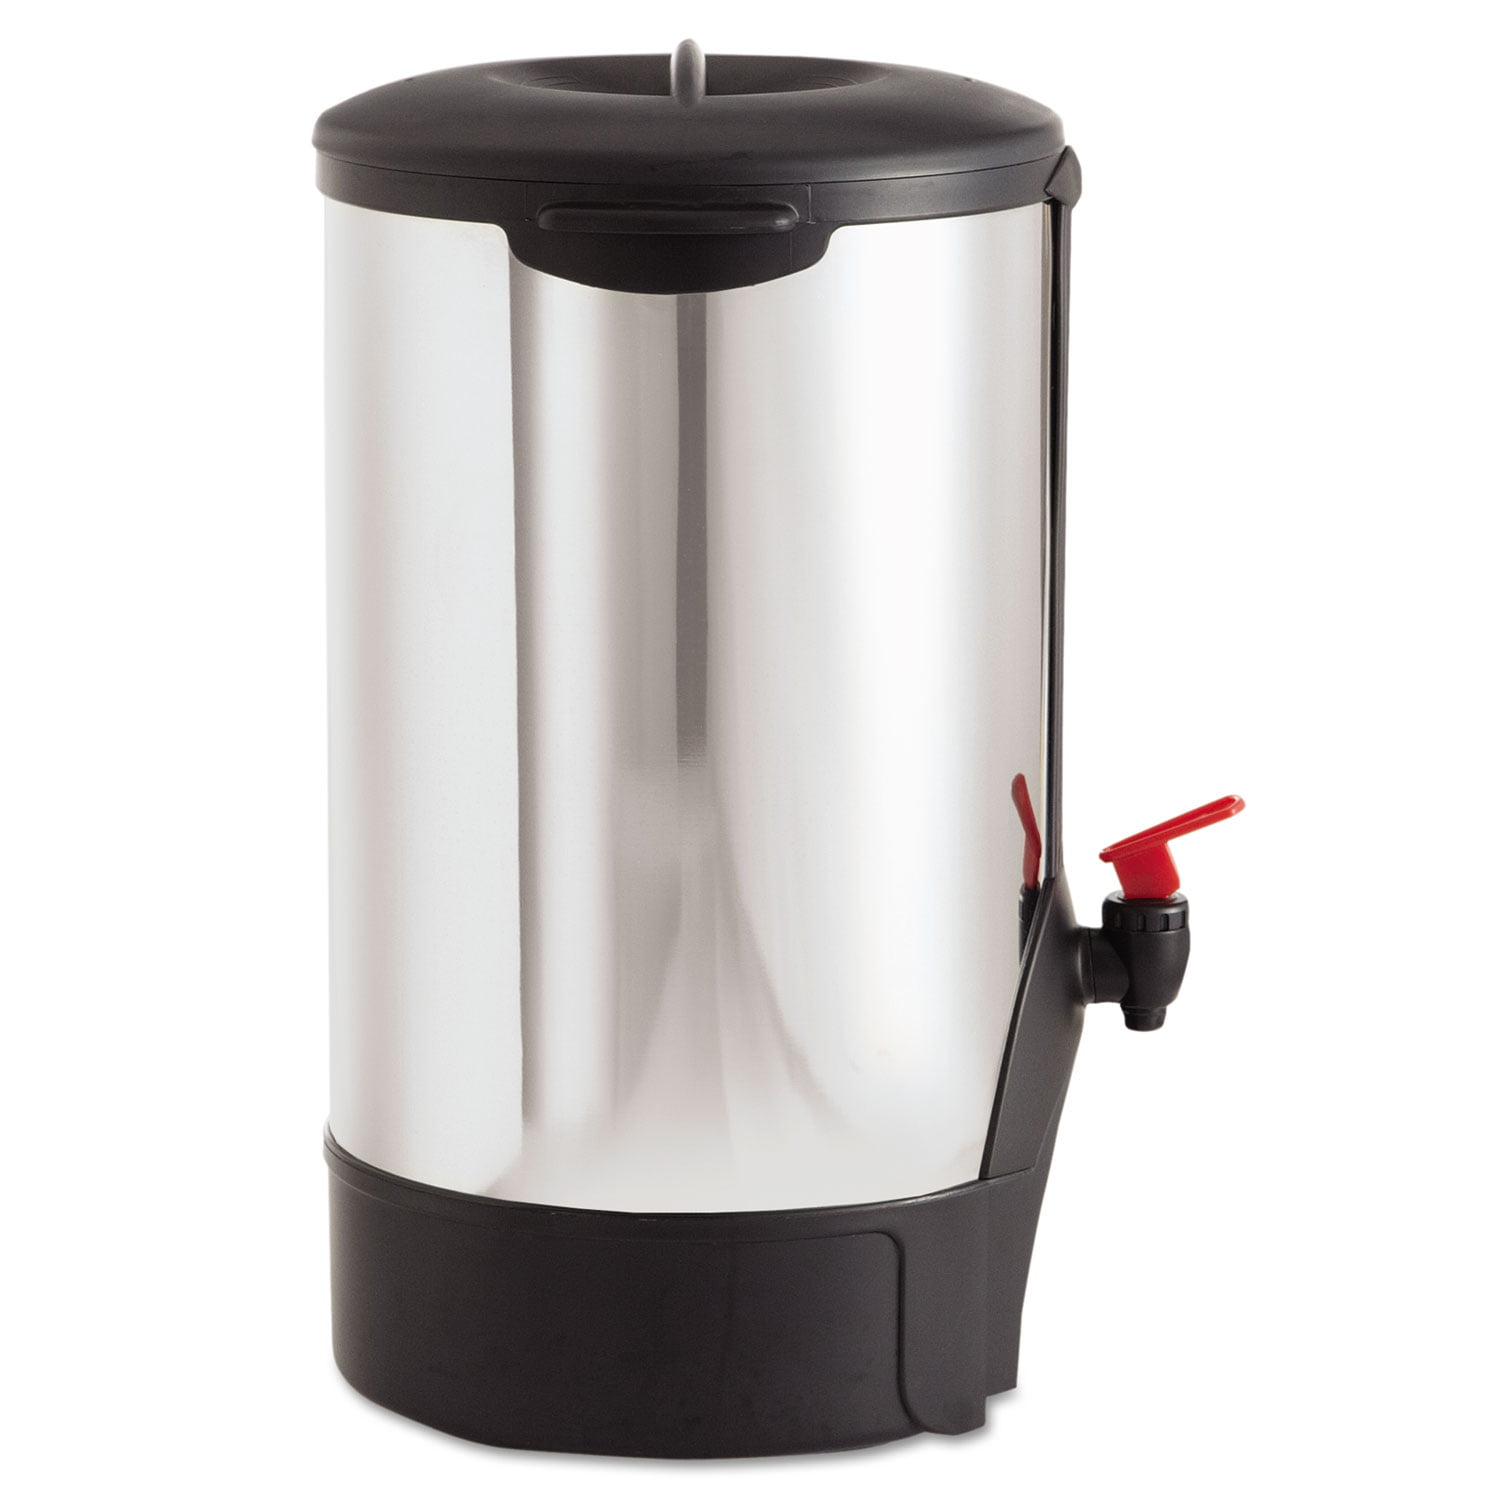 Pump pot (2.2-liter) – Coffee City USA